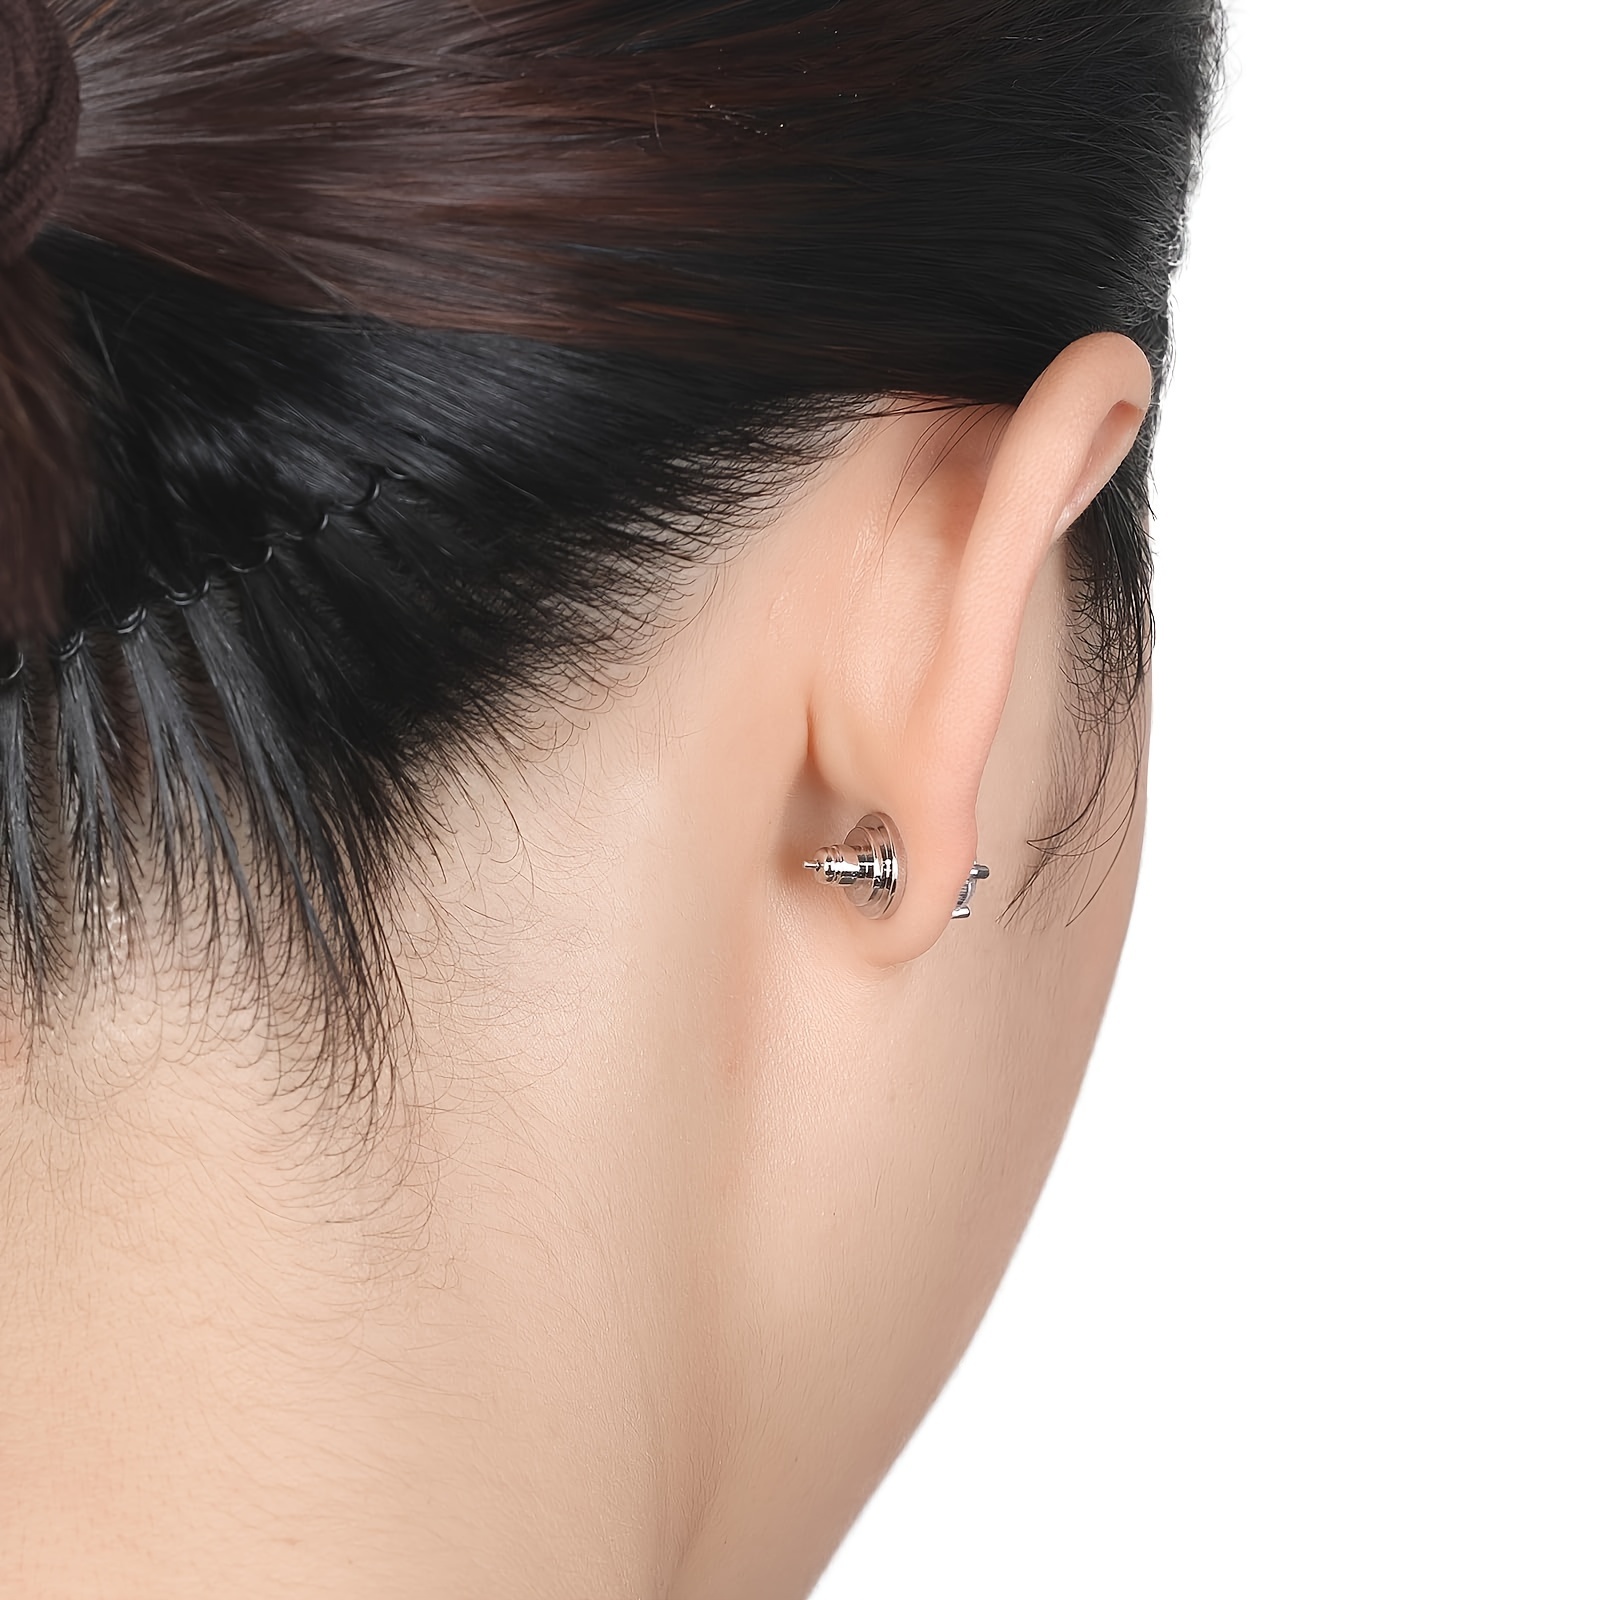 3 Pairs Earring Lifters - Hypoallergenic Earring Backs For Droopy Ears,  Adjustable Crown Earring Backs For Heavy Earrings